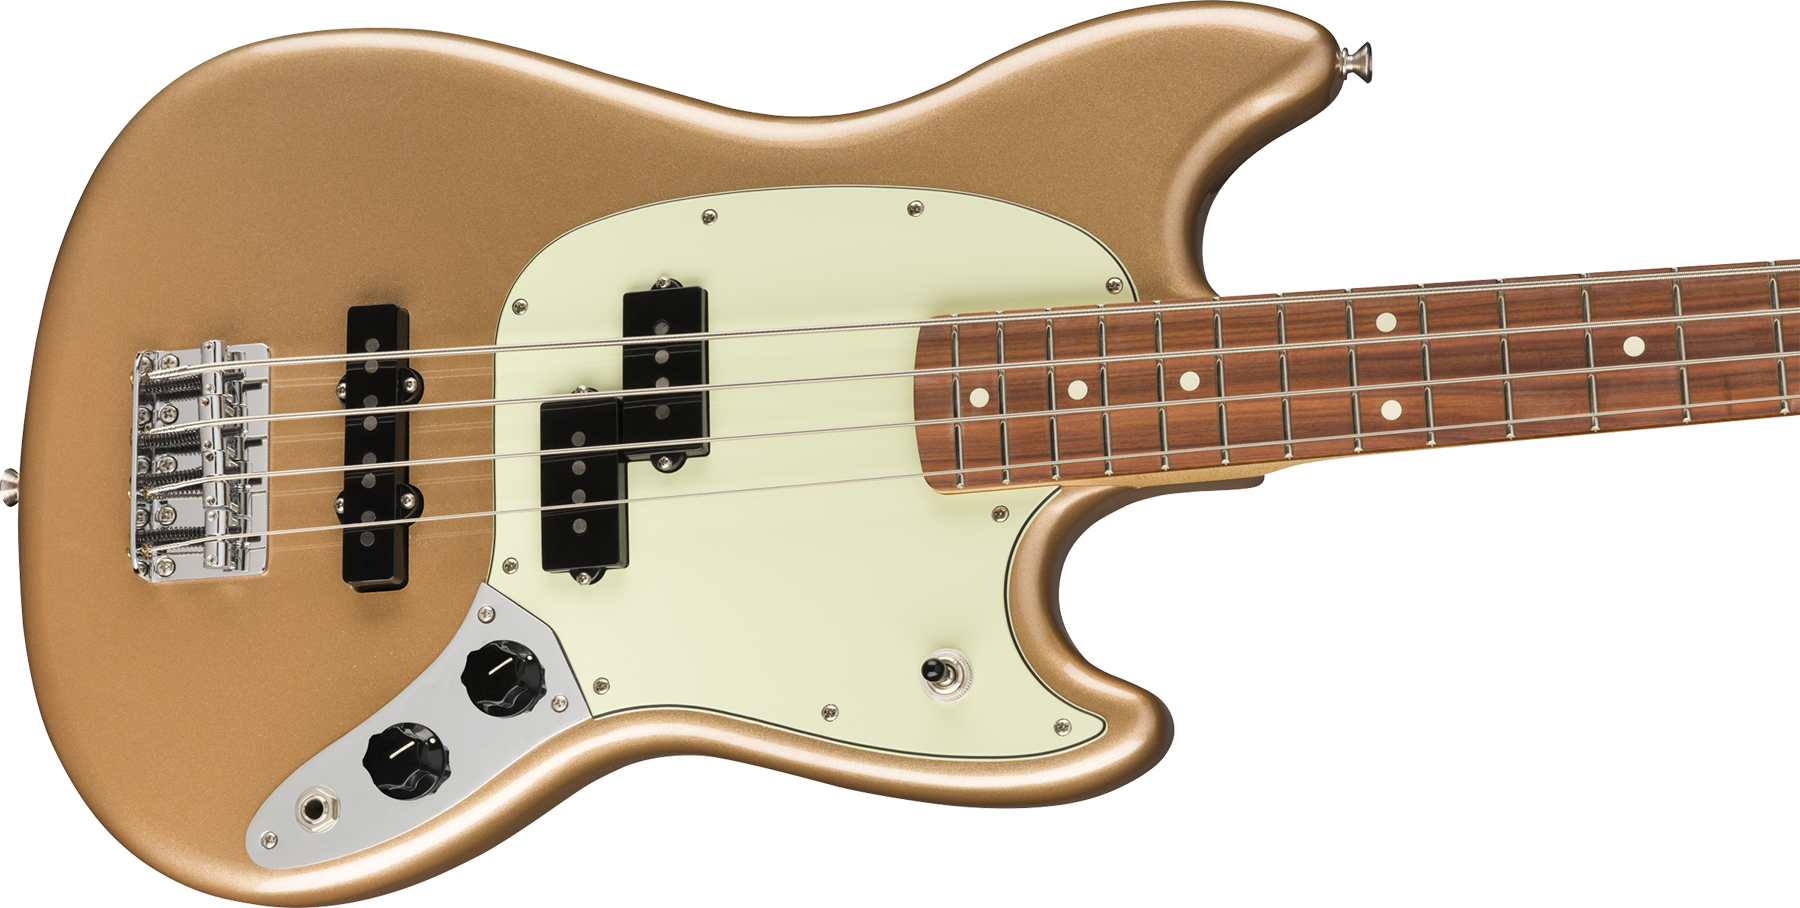 Fender Player Mustang Bass Mex Pf - Firemist Gold - Short scale elektrische bas - Variation 2